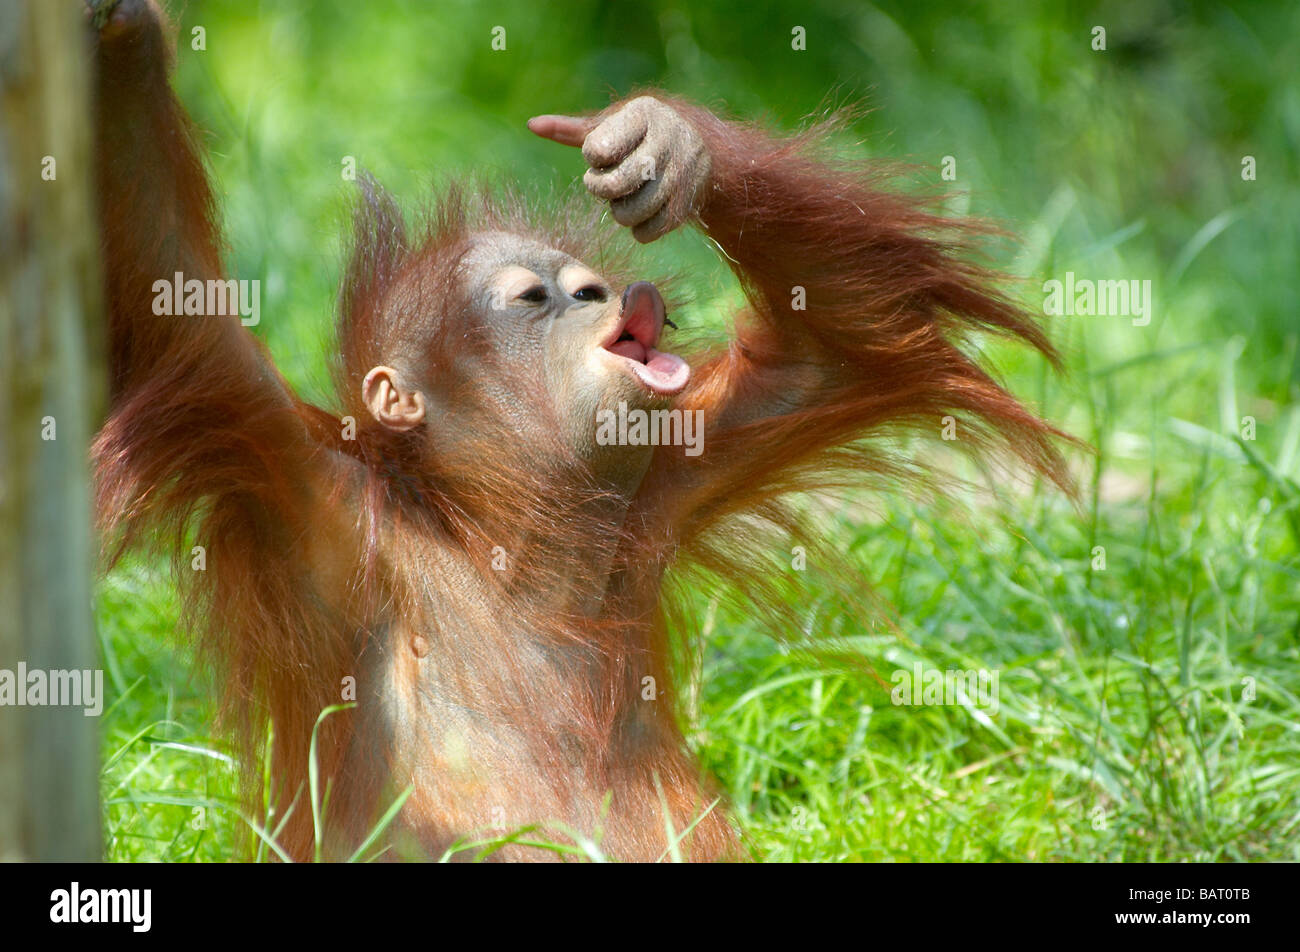 cute baby orangutan playing on the grass Stock Photo